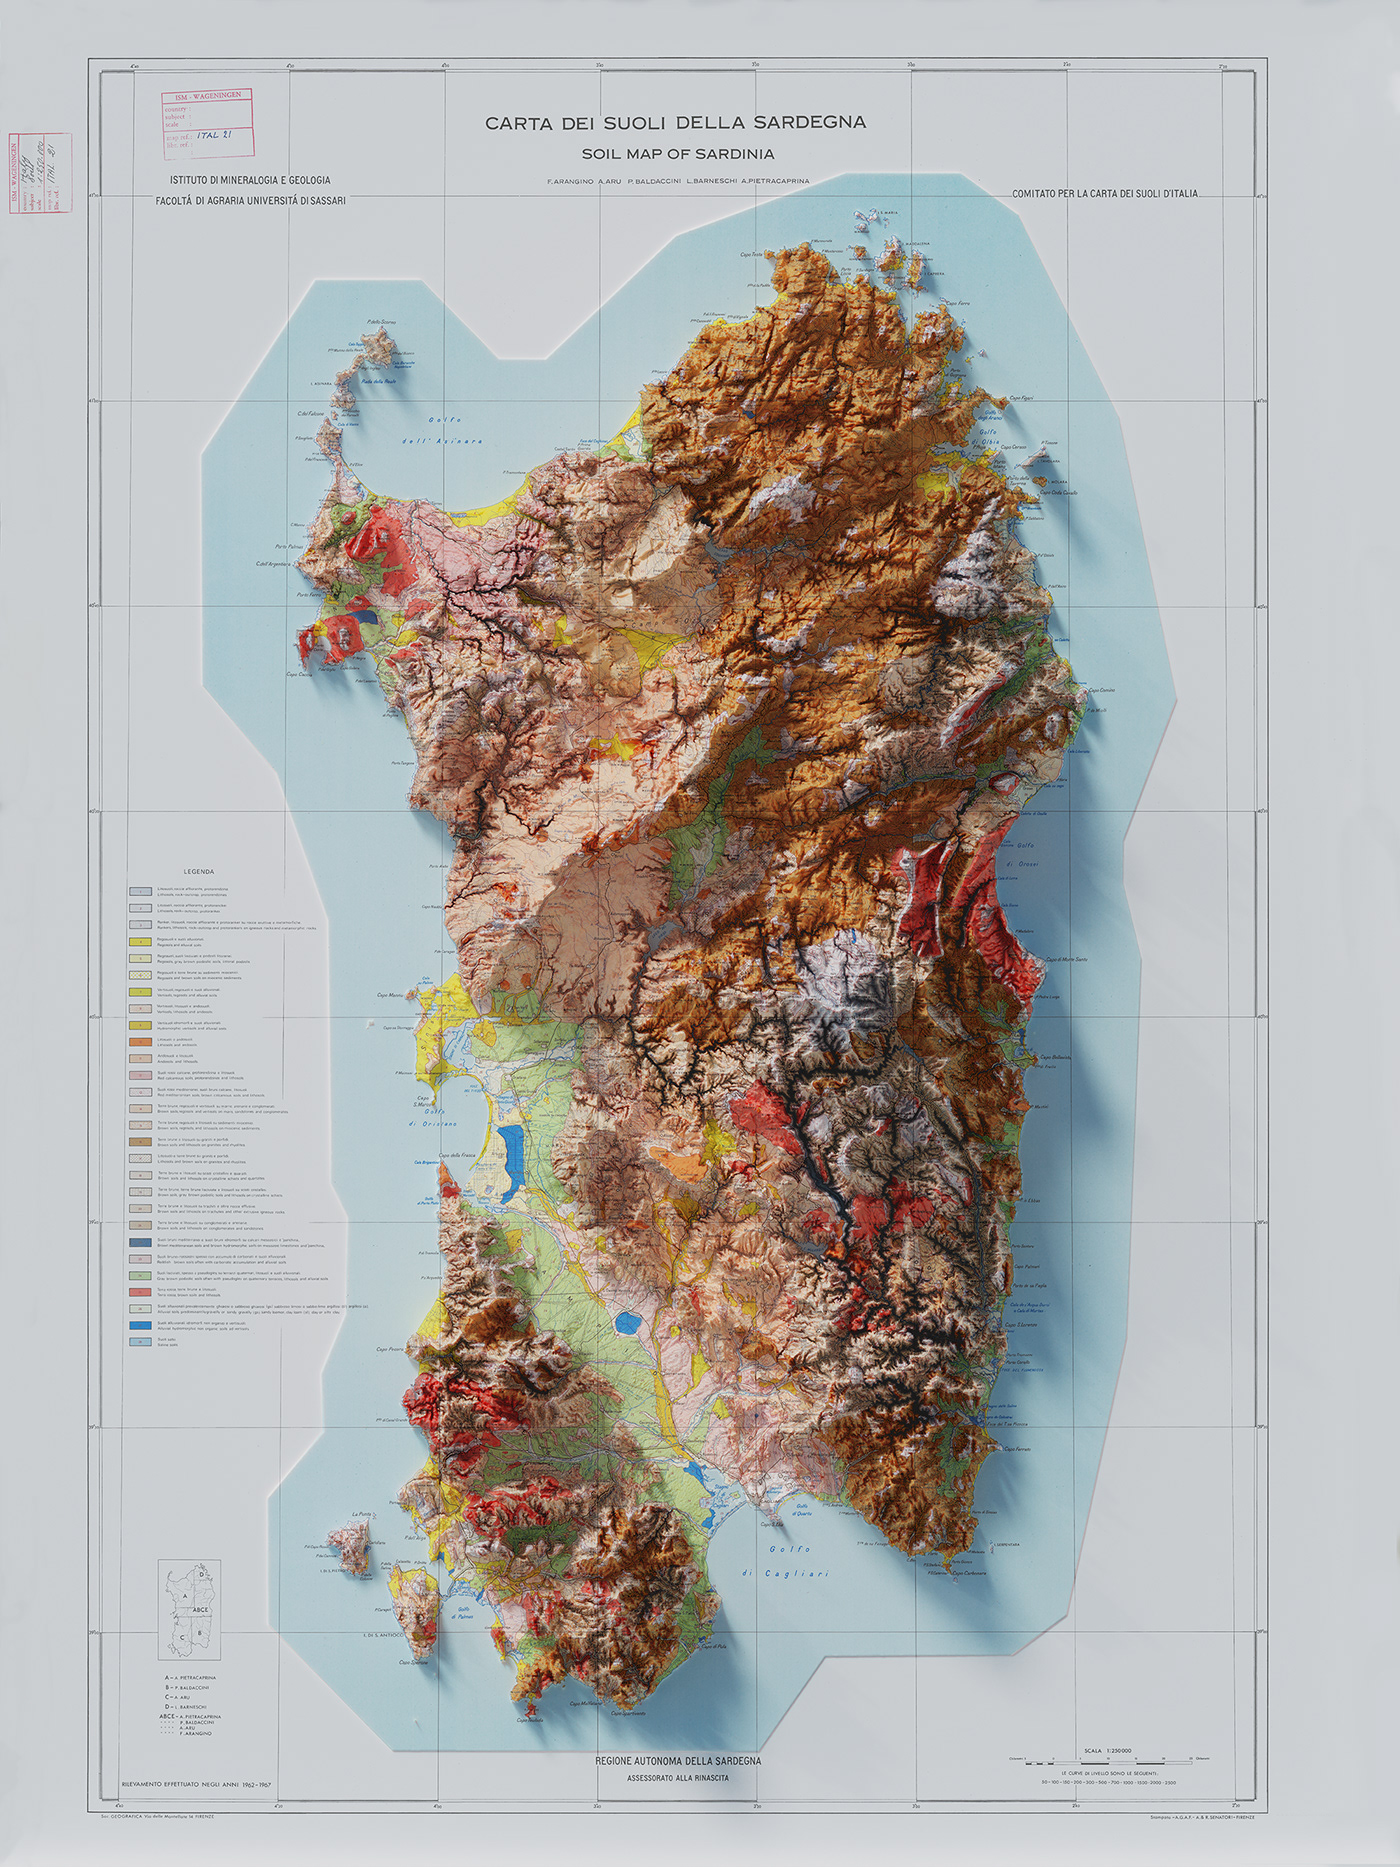 3D Relief ArtData cartography dataviz elevation data Italy maps vintage maps